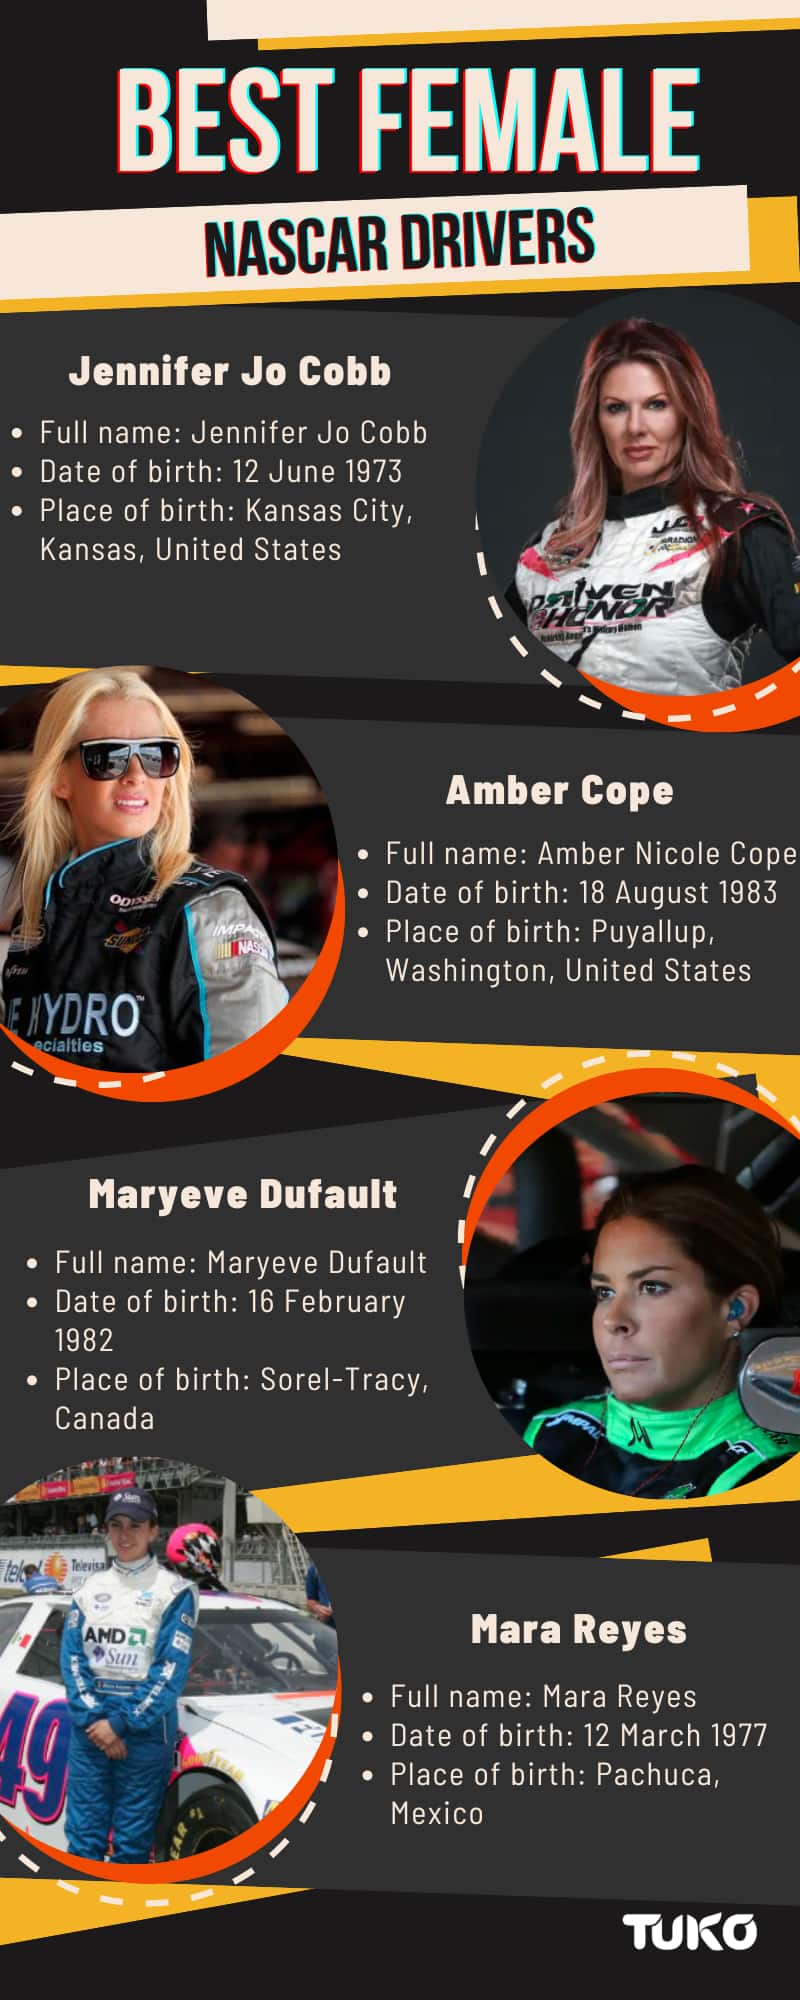 Best female NASCAR drivers